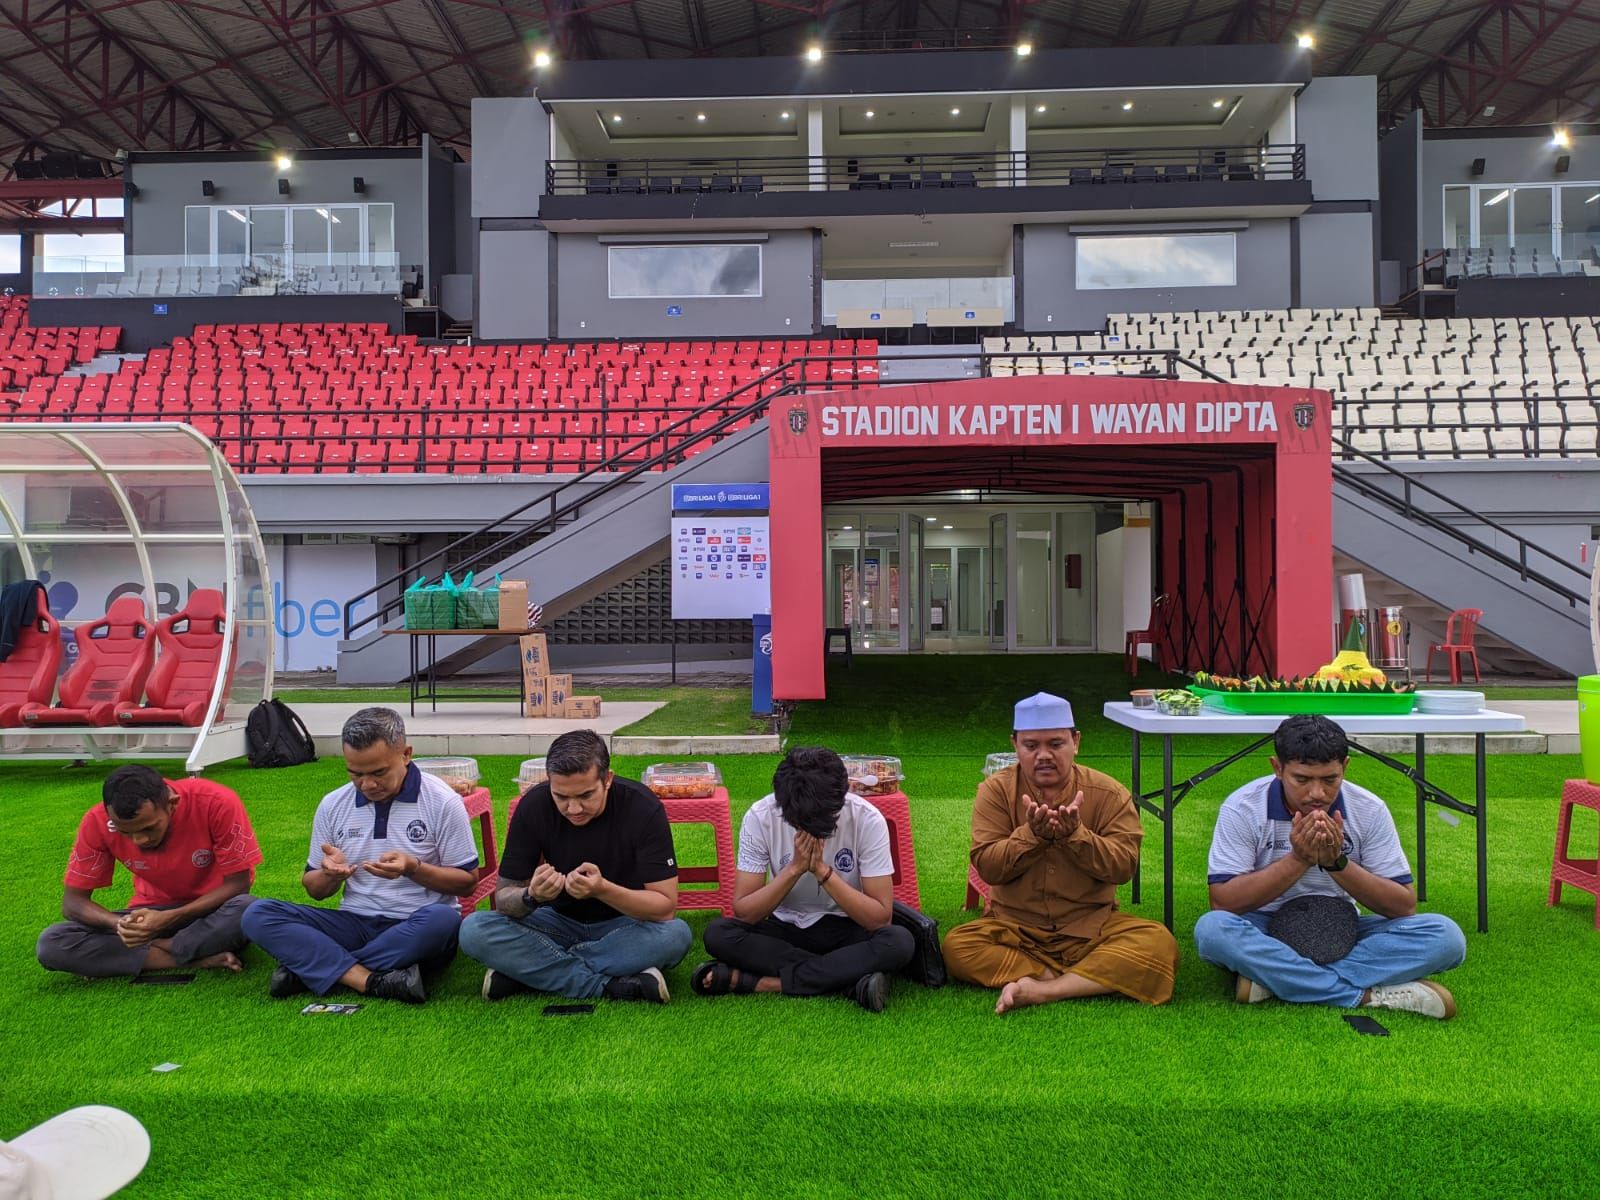 Manajemen Arema FC syukuran dan potong tumpeng di Stadion Kapten I Wayan Dipta, Giayar, Bali markas Arema FC saat ini.